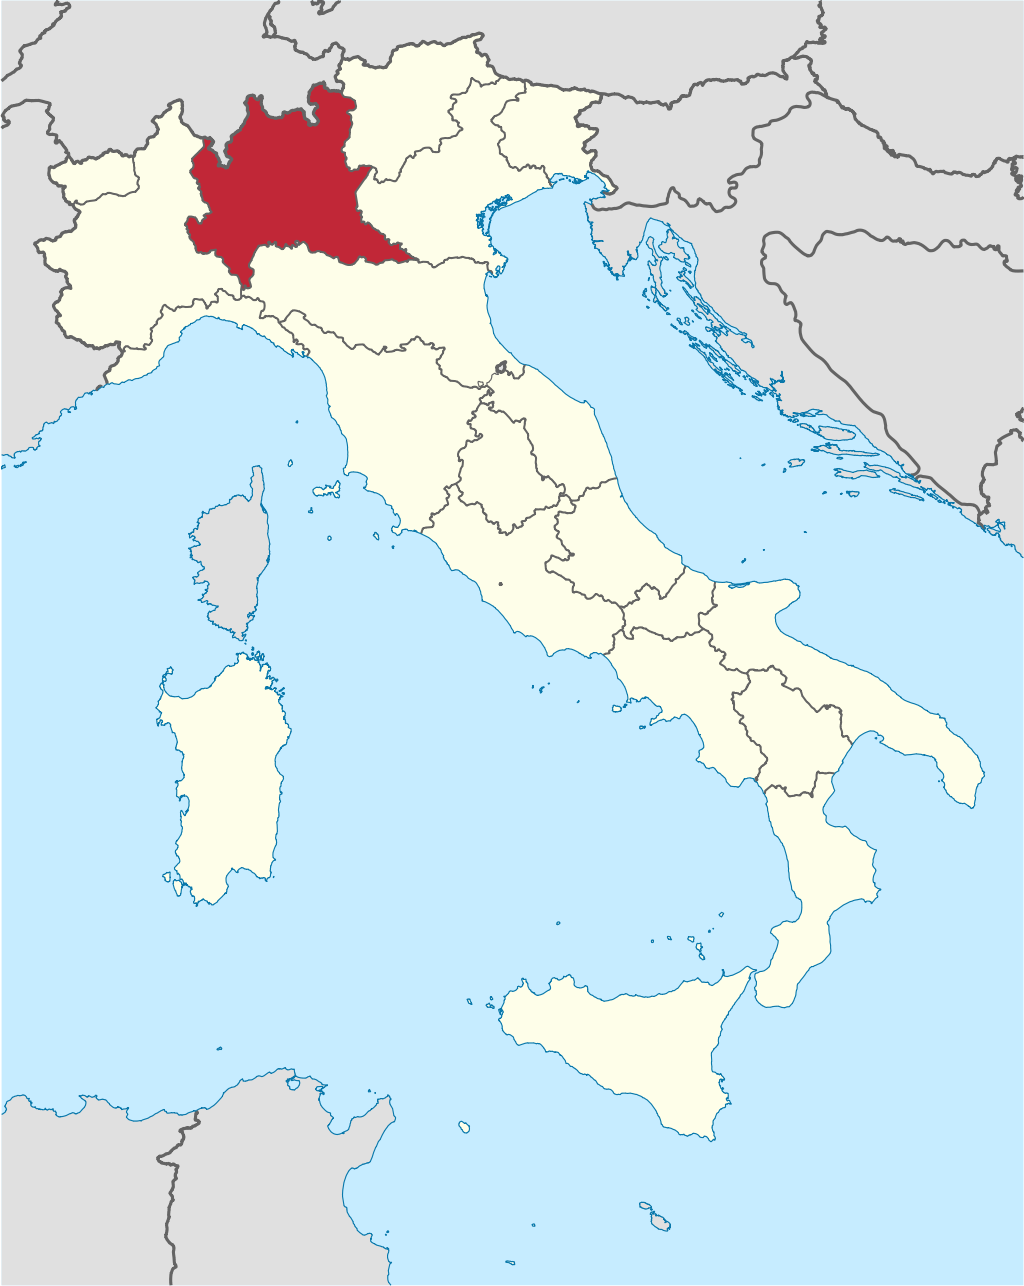 Azienda Agricola Urbex location or around the region Lombardia (Bergamo), Italy